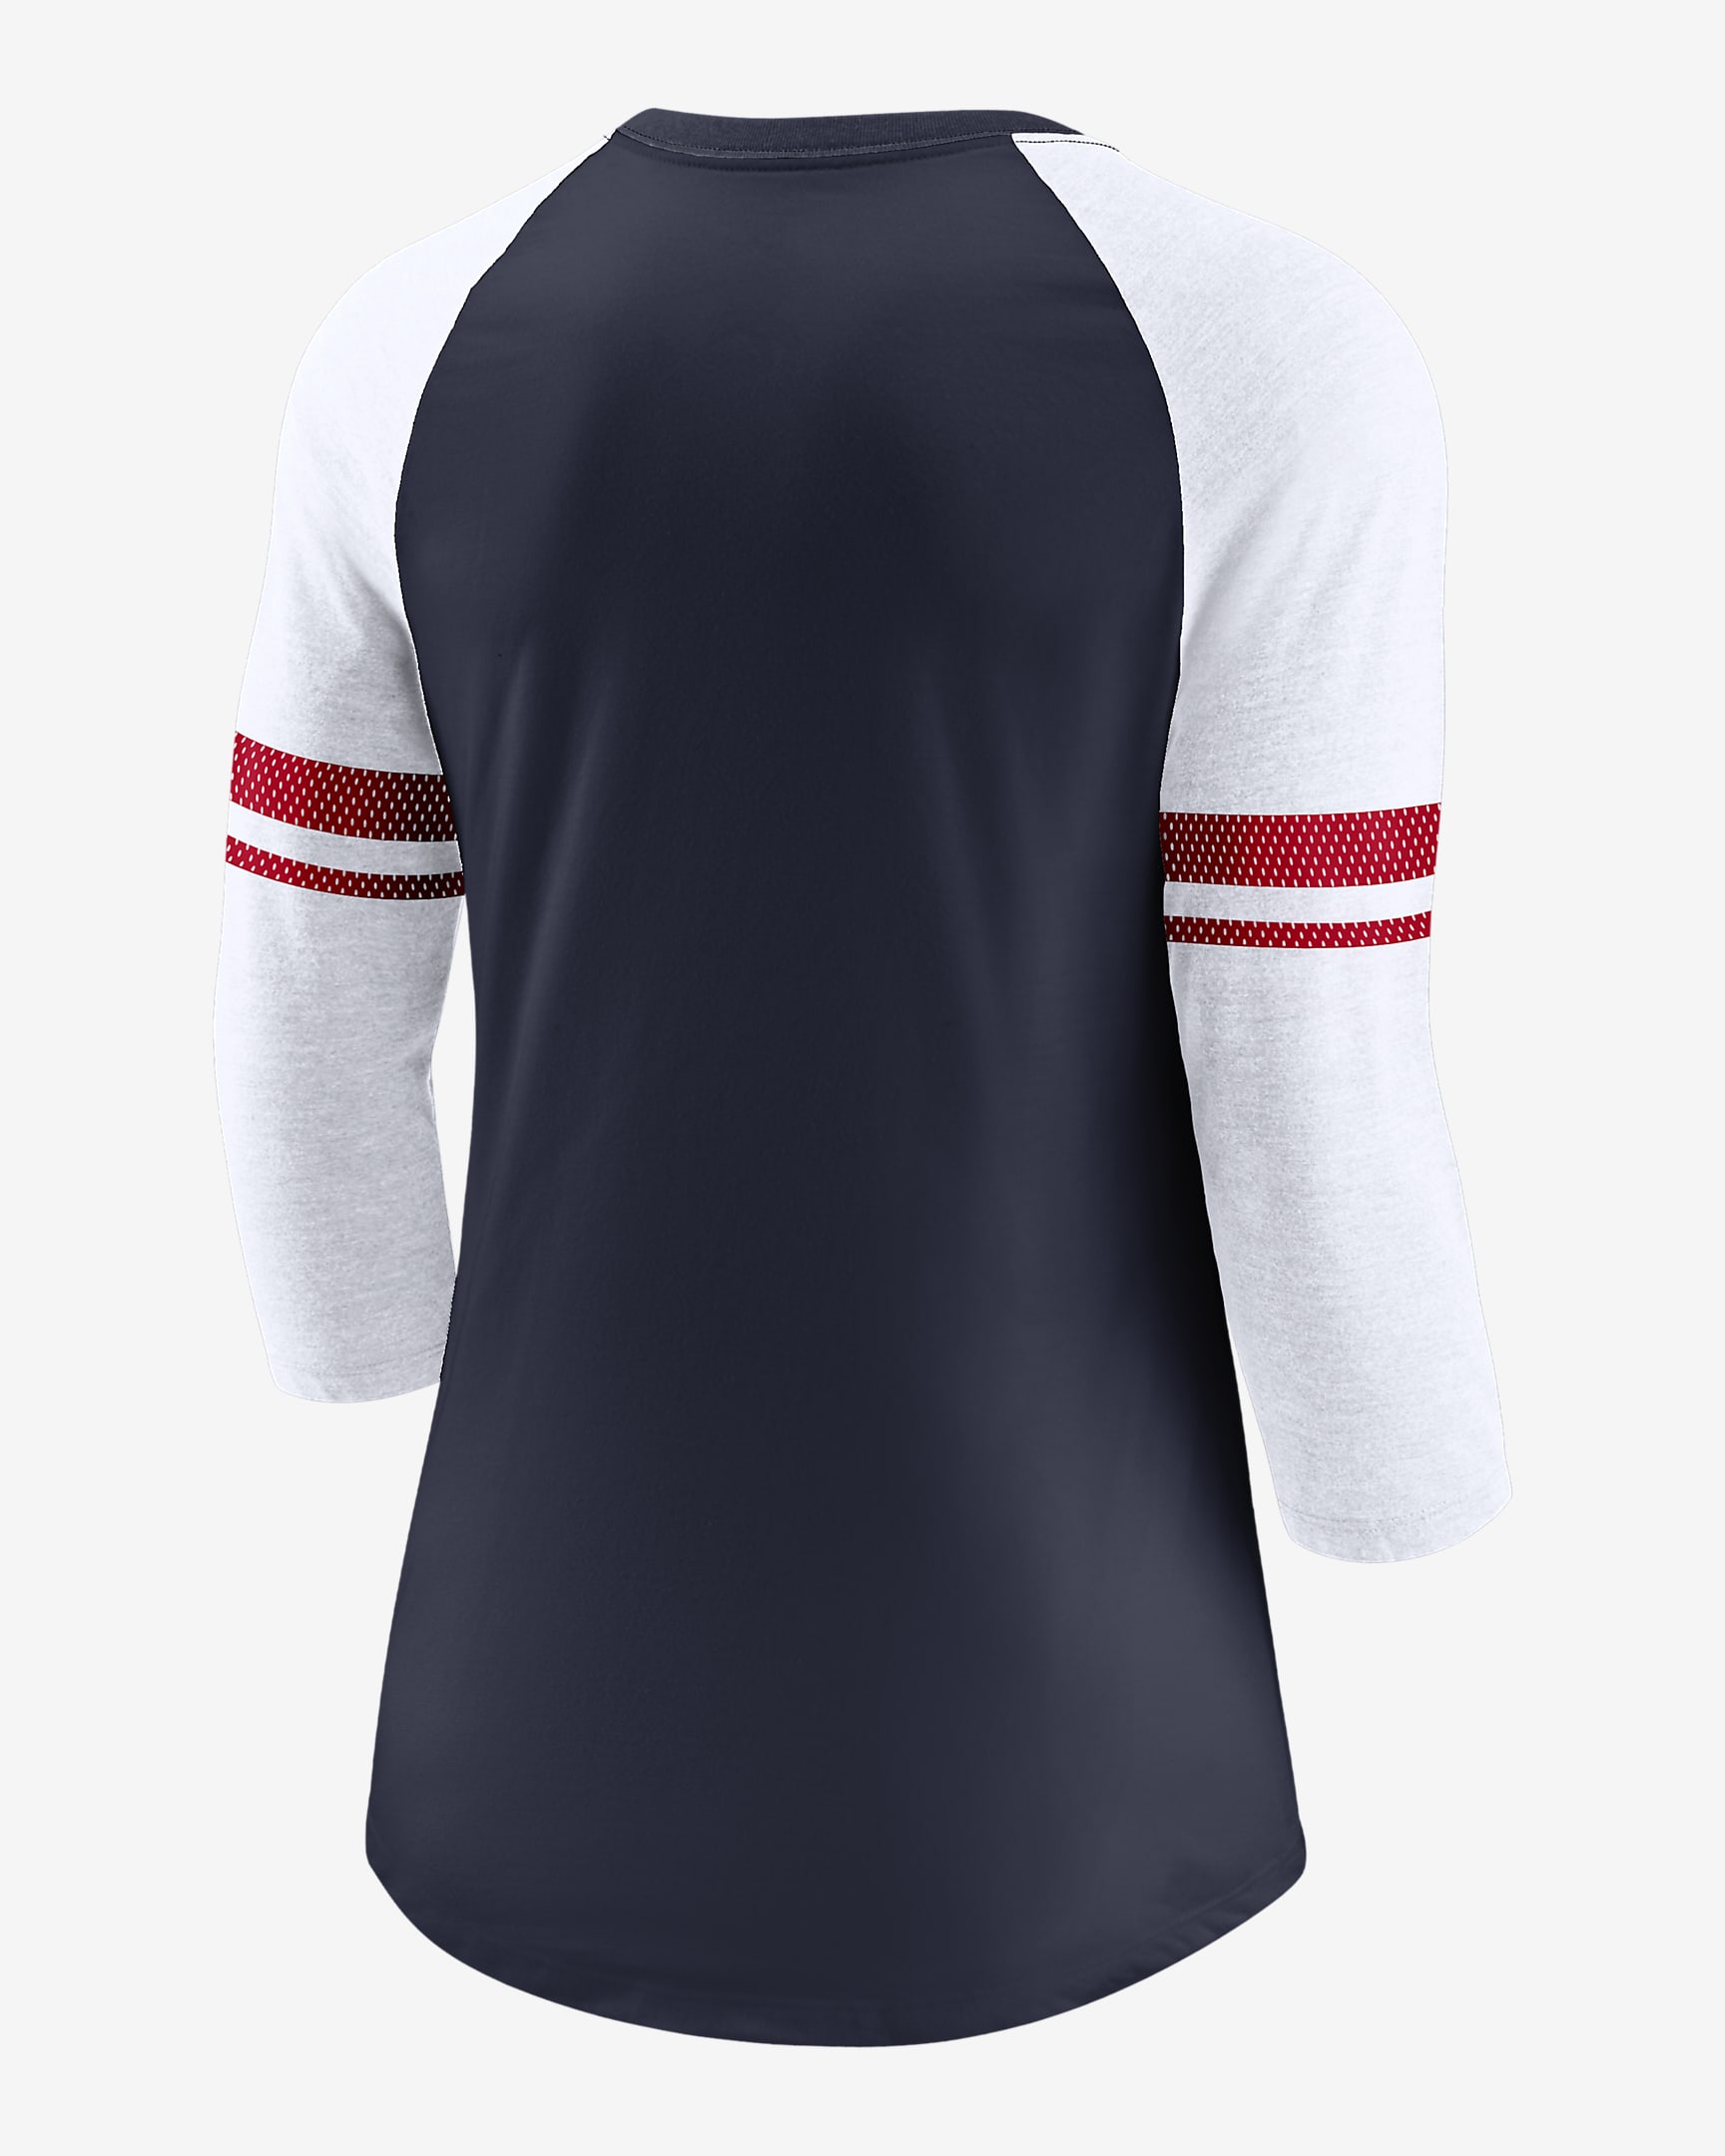 Nike Fashion (NFL New England Patriots) Women's 3/4-Sleeve T-Shirt ...